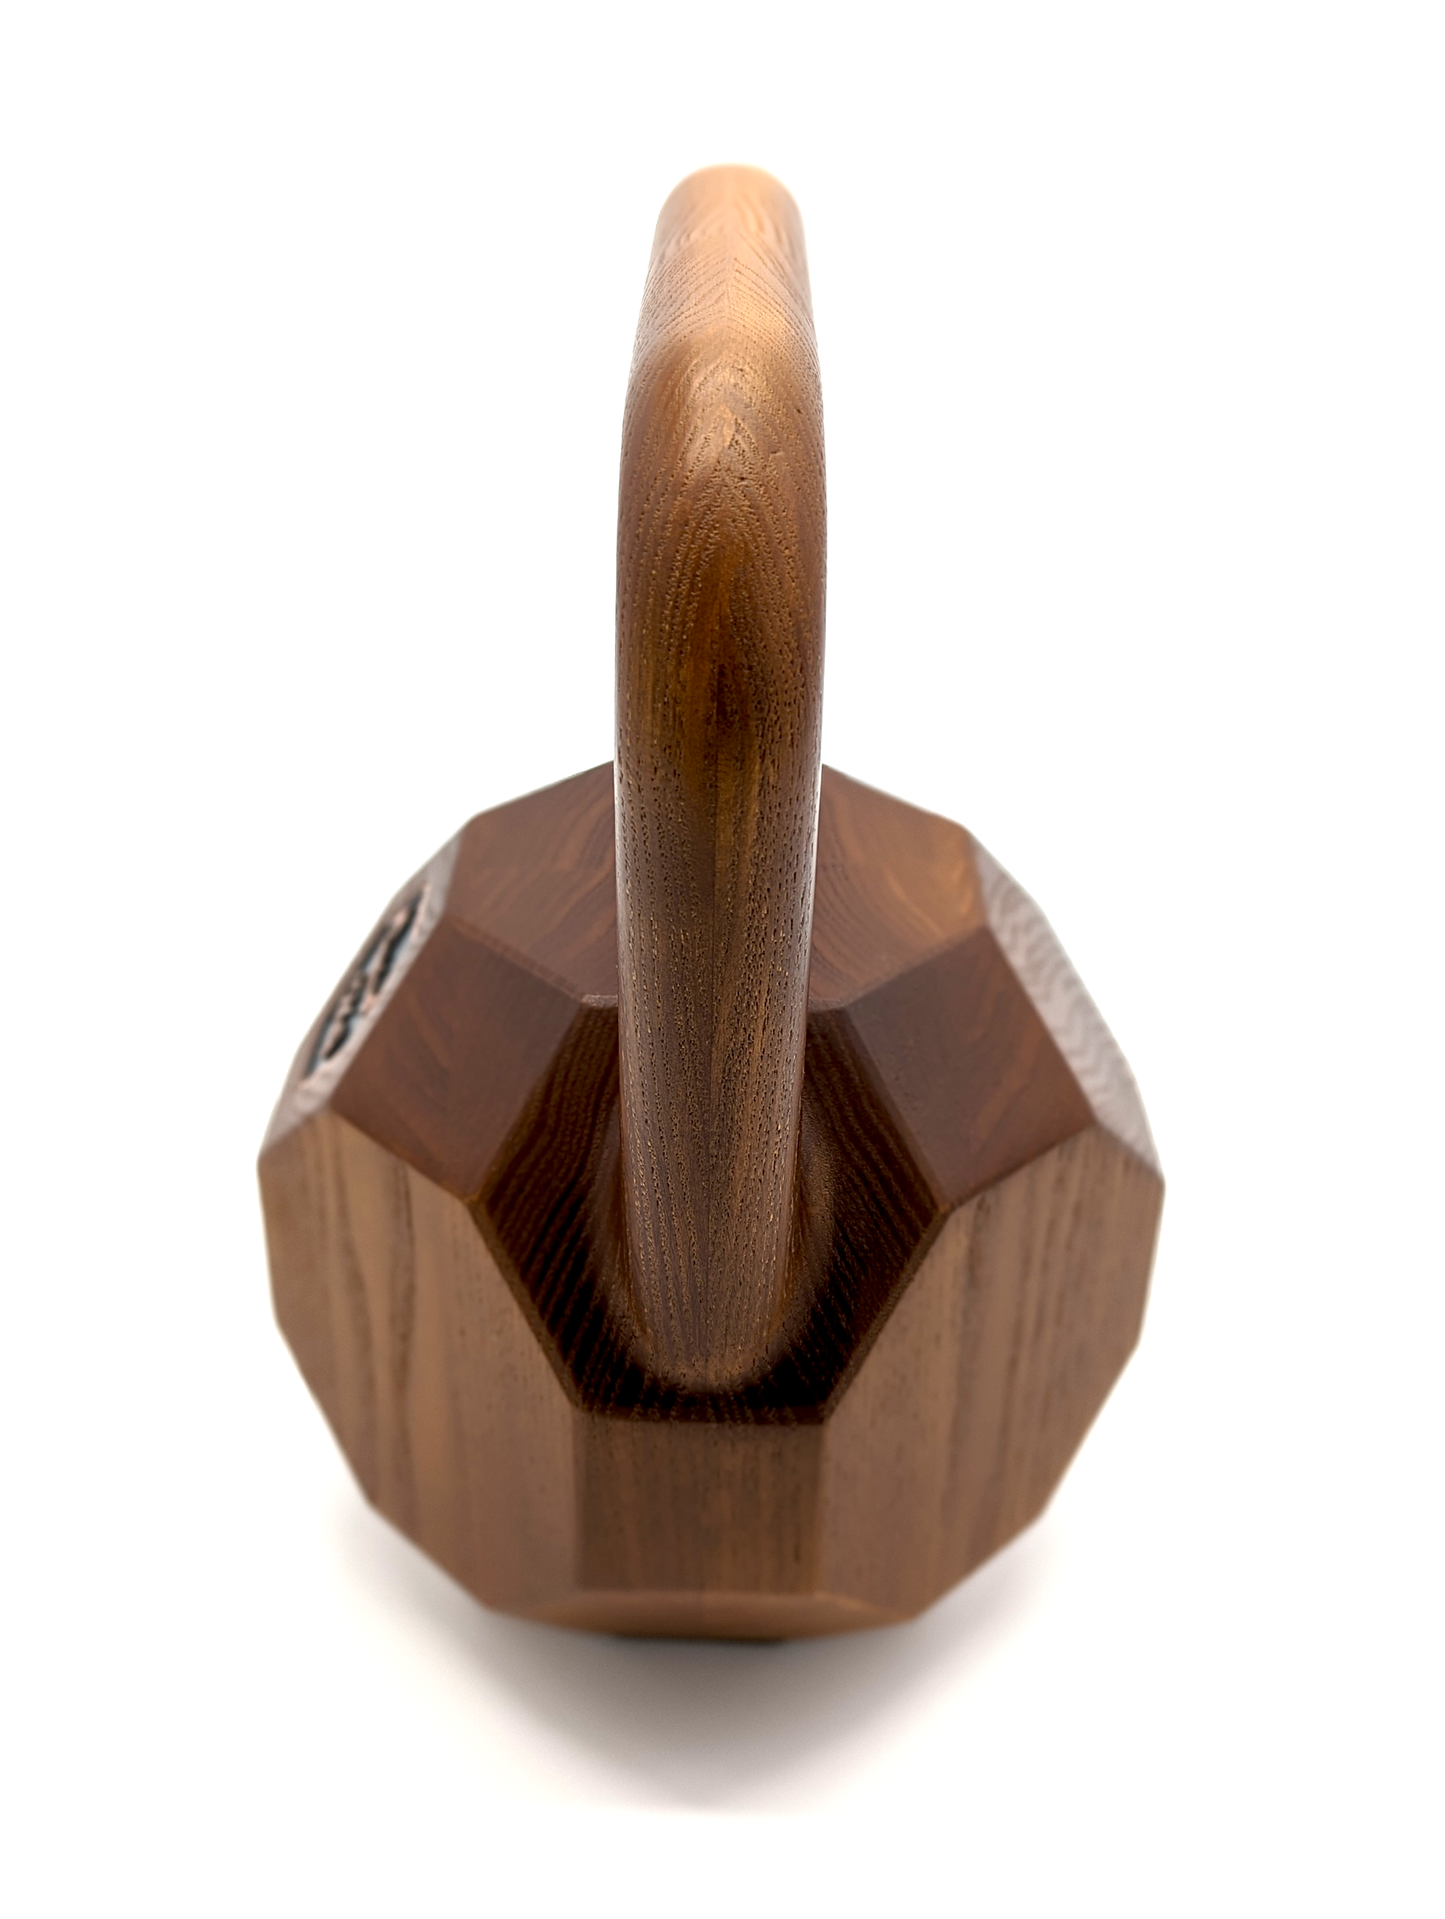 Diamond Kettlebell - wooden kettlebell